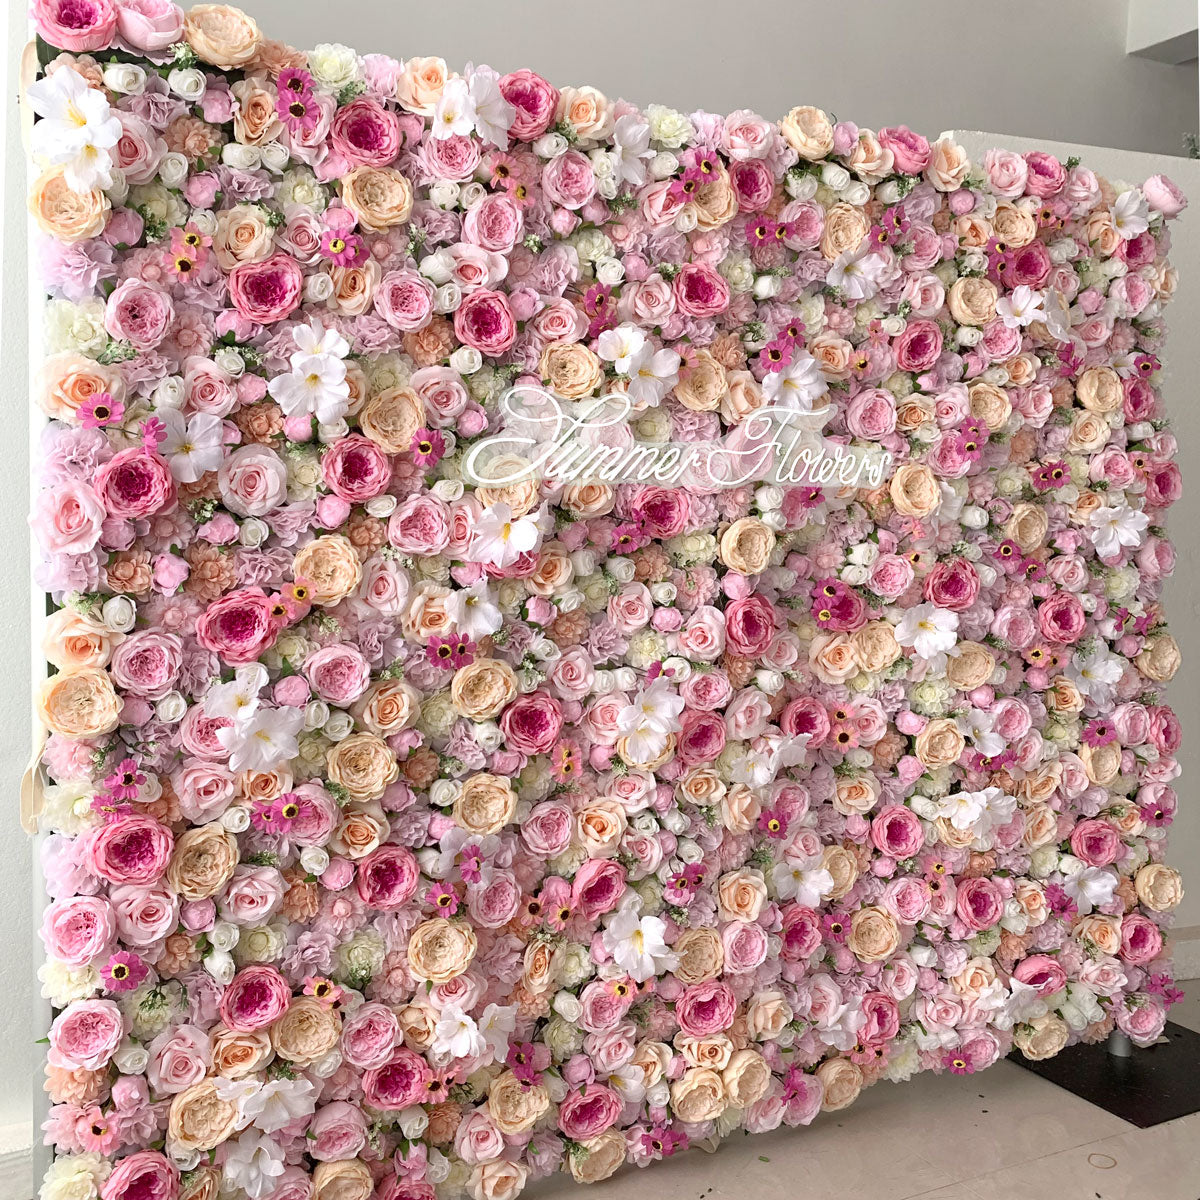 Summer Flower:CB-184 8ft*8ft Cloth Back Artificial Flower Wall Backdrop